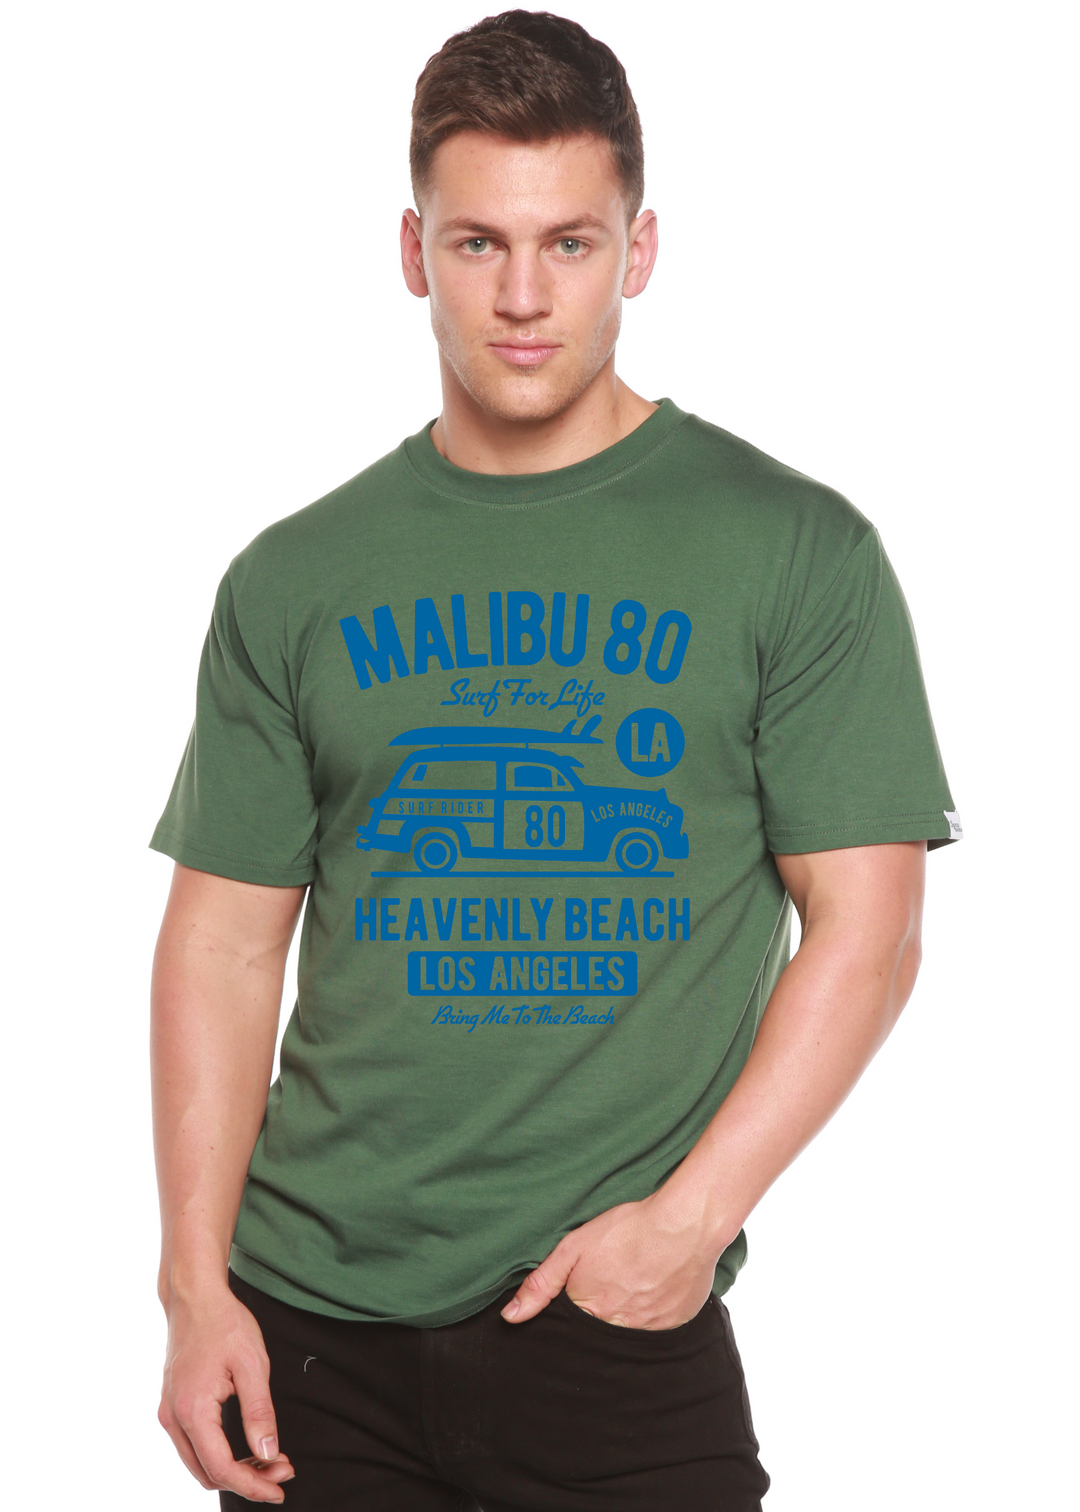 Malibu 80 men's bamboo tshirt pine green